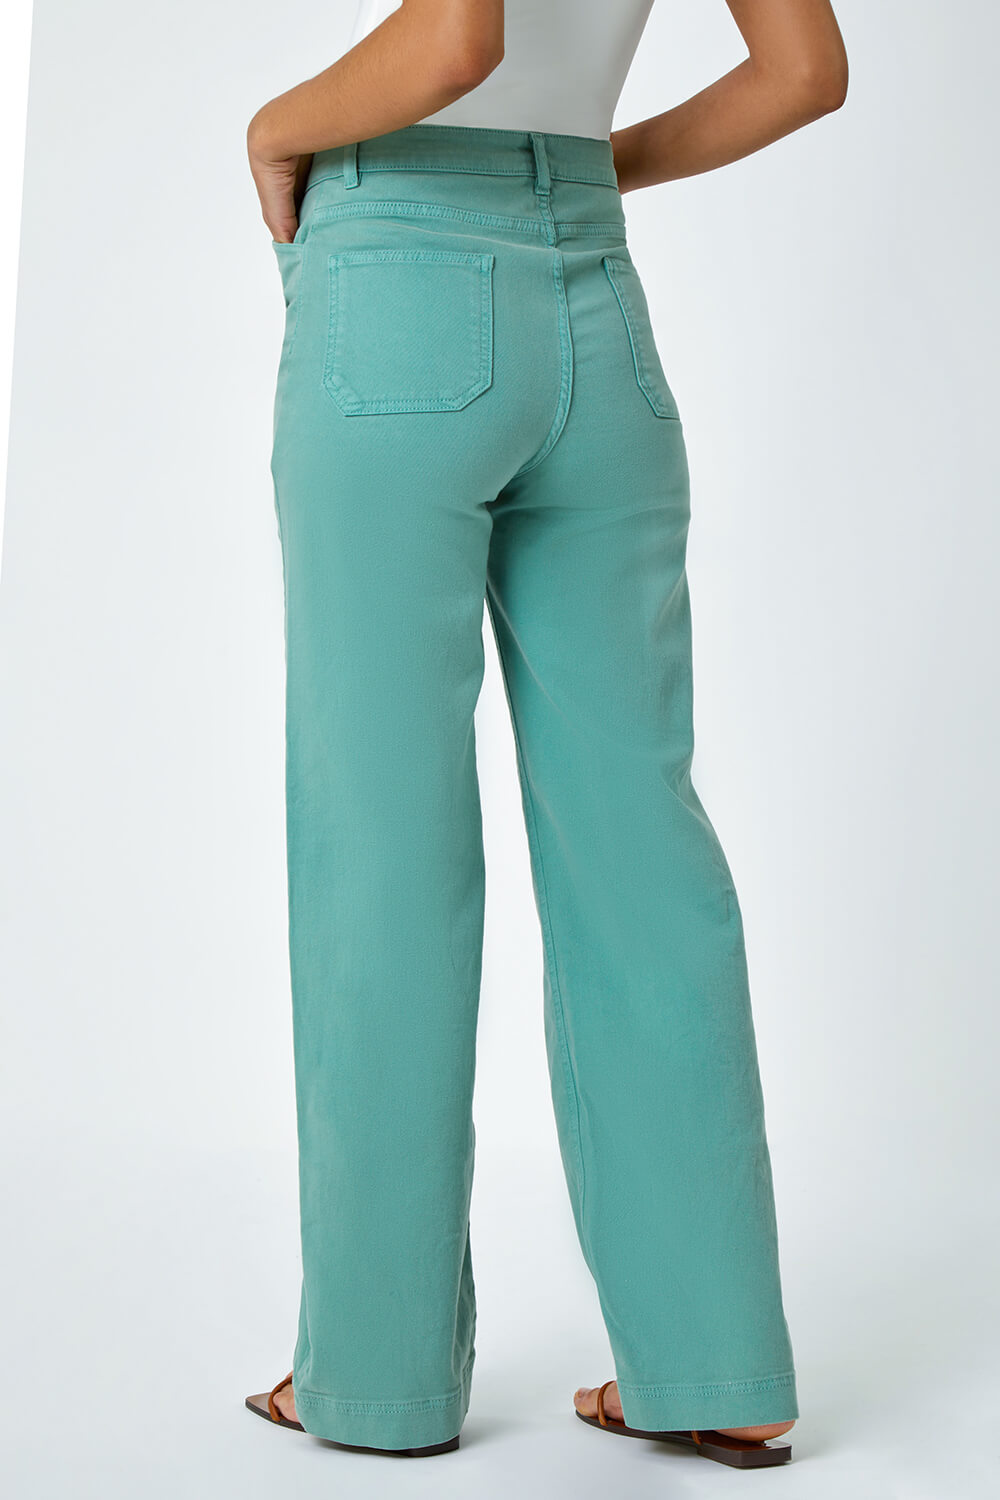 Sage Cotton Blend Wide Leg Stretch Jeans, Image 3 of 5